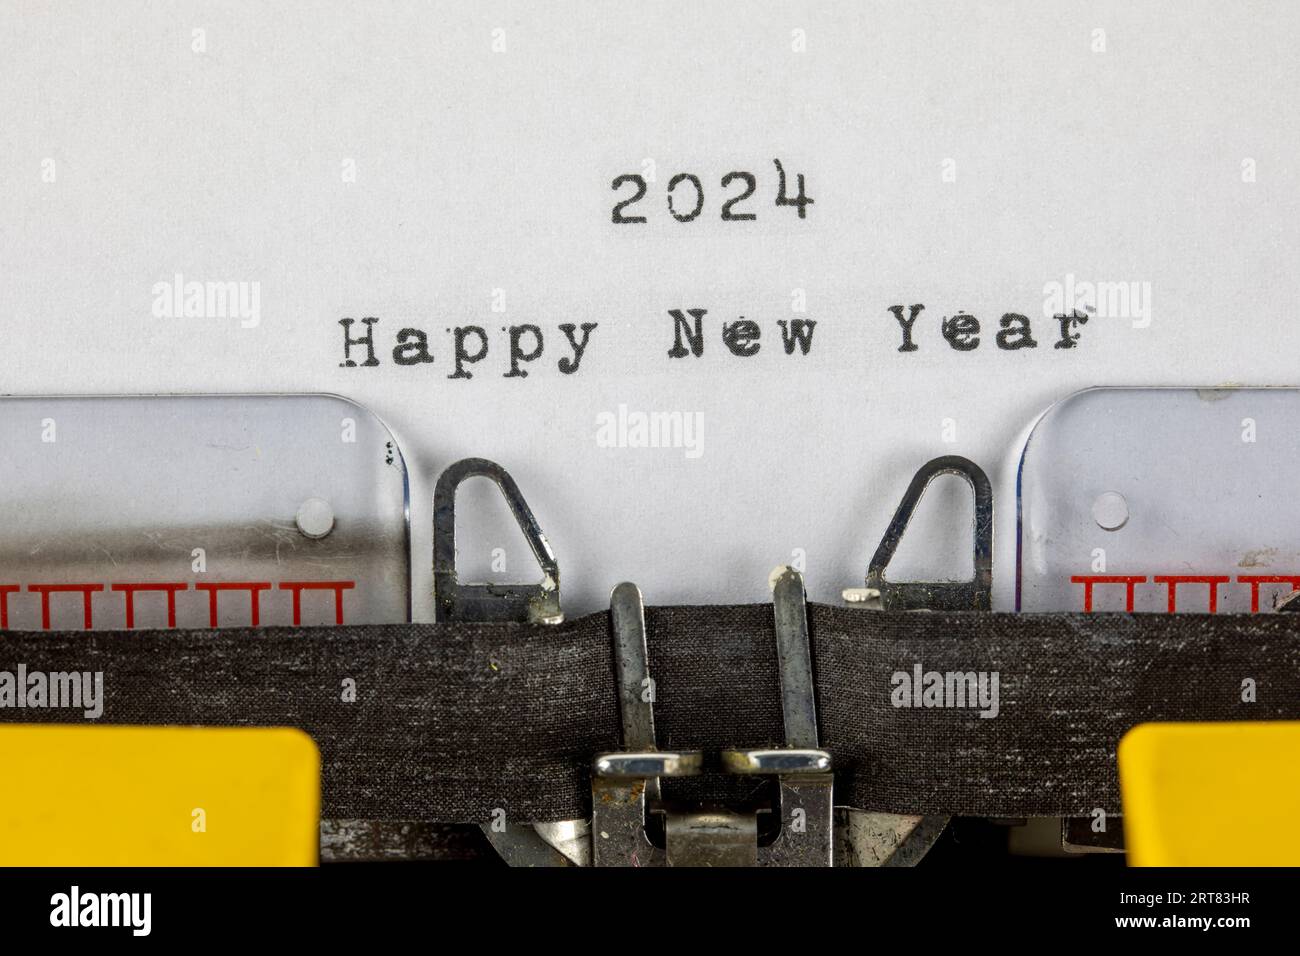 Happy New Year 2024 written on an old typewriter Stock Photo